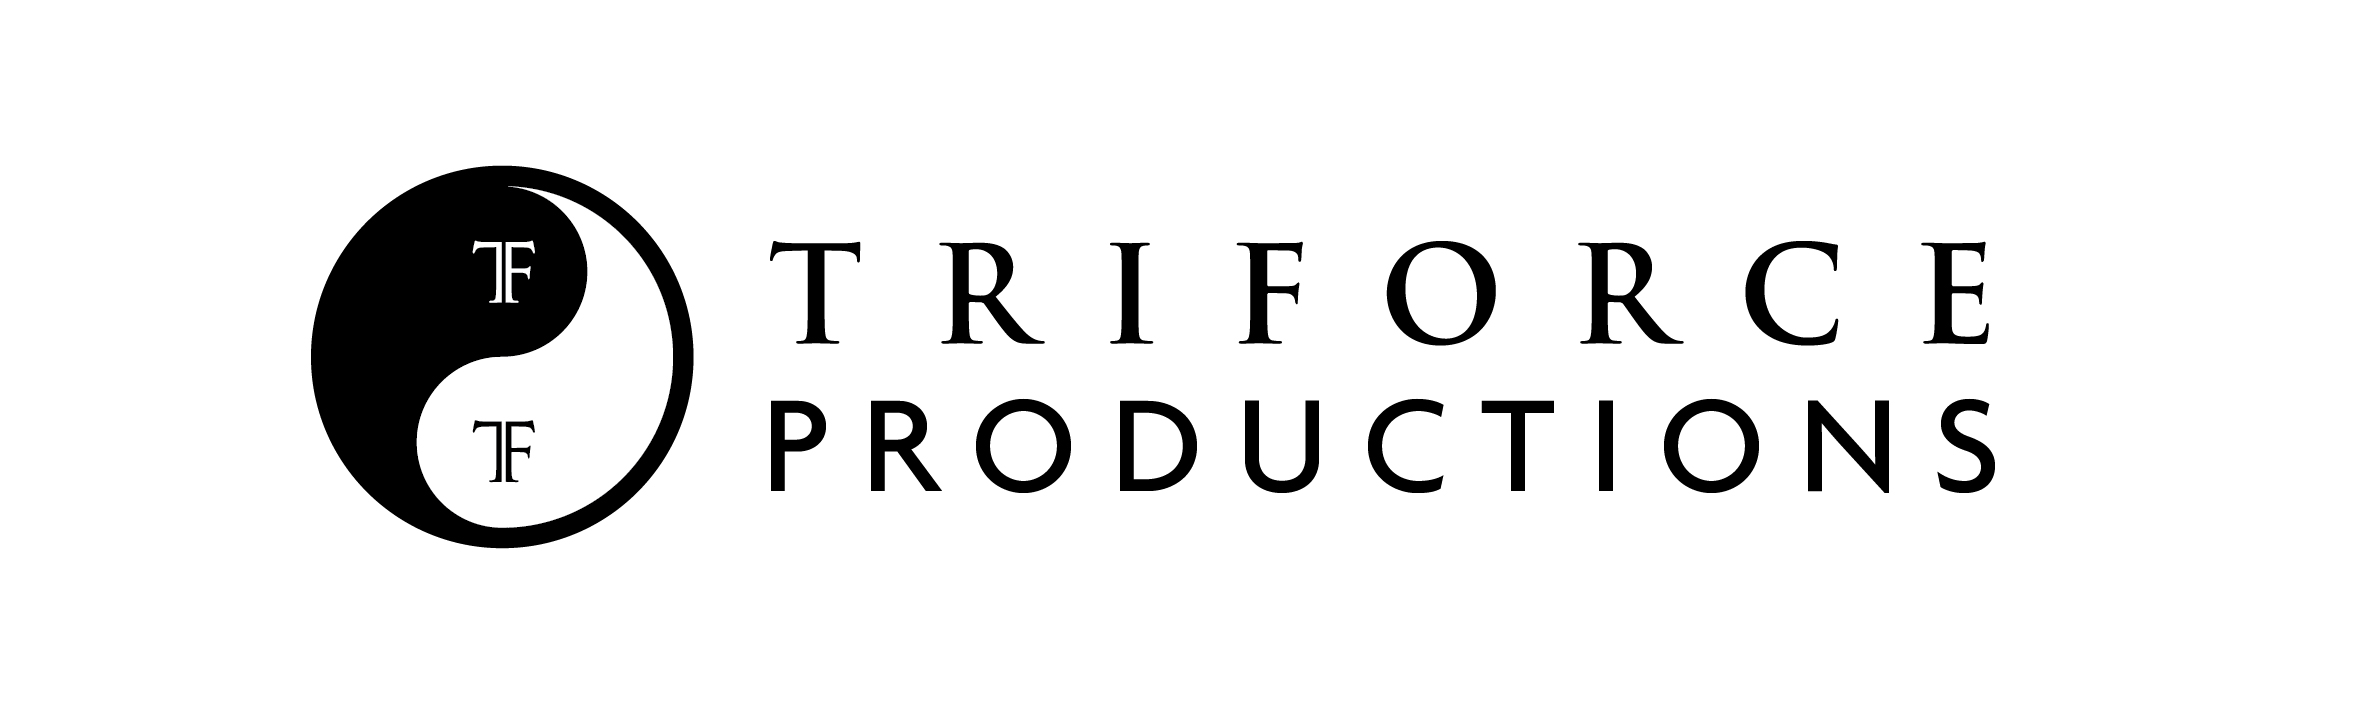 Triforce Productions